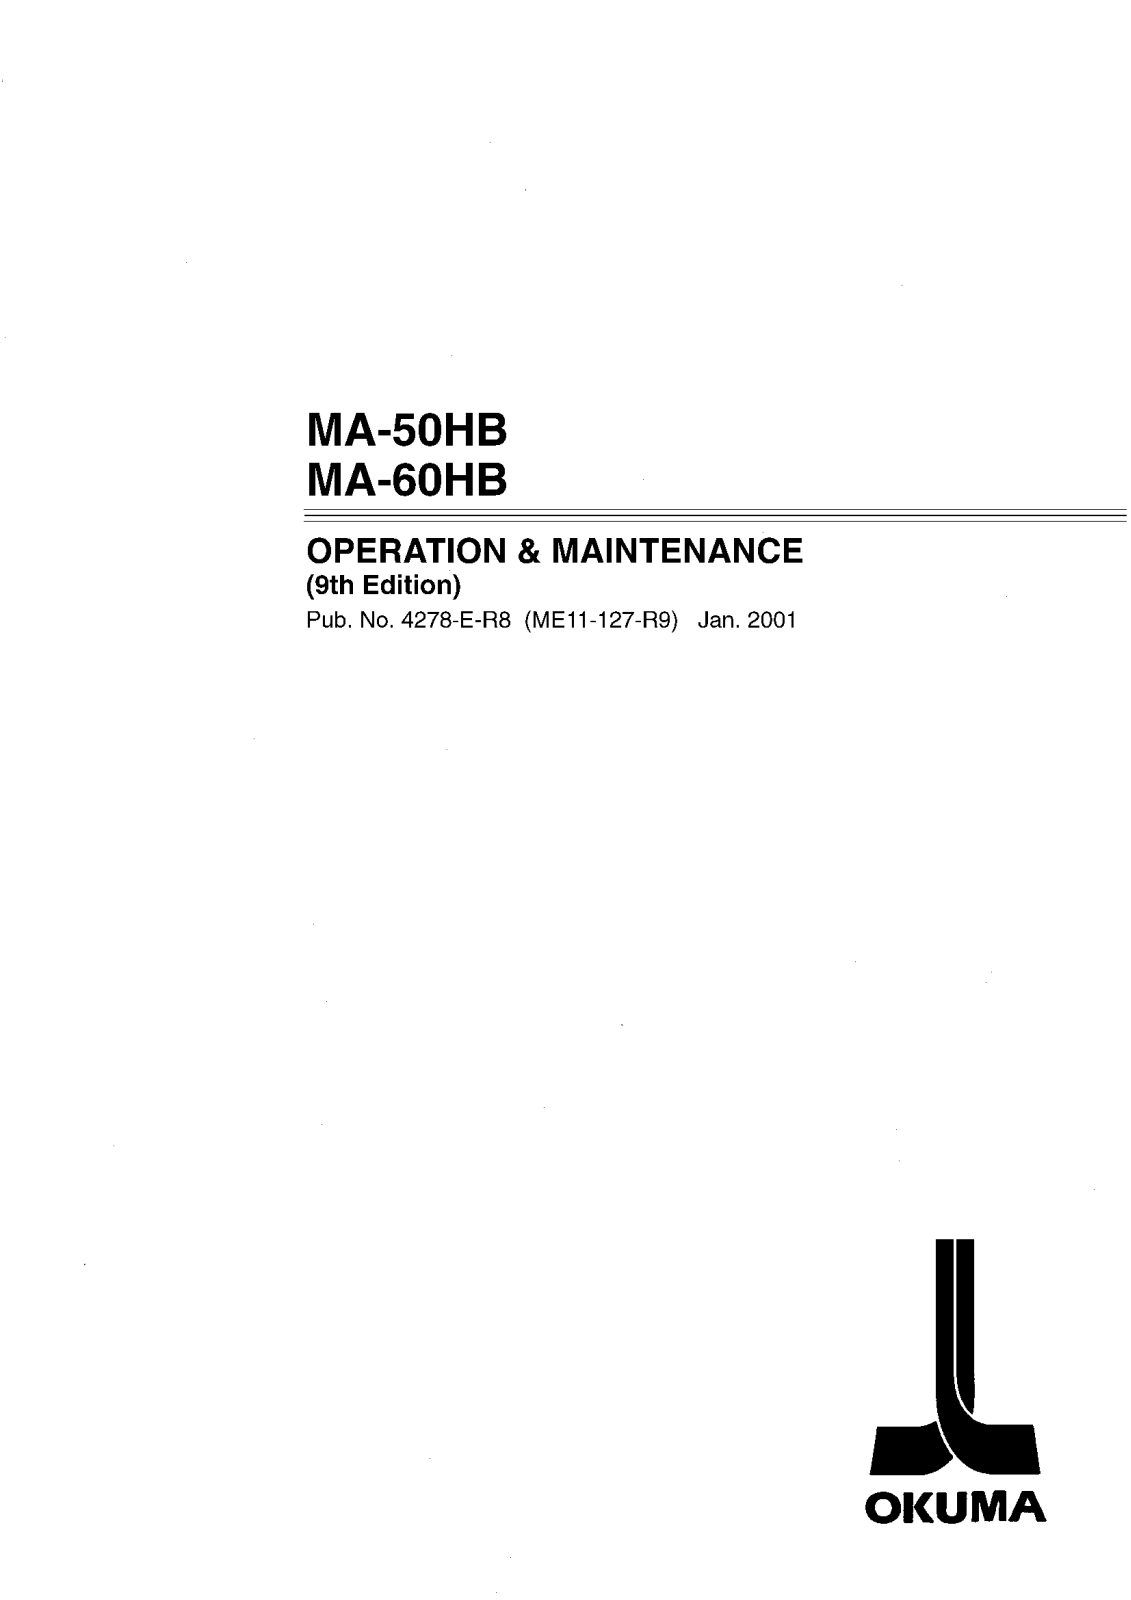 okuma MA-50-HB Maintenance Manual